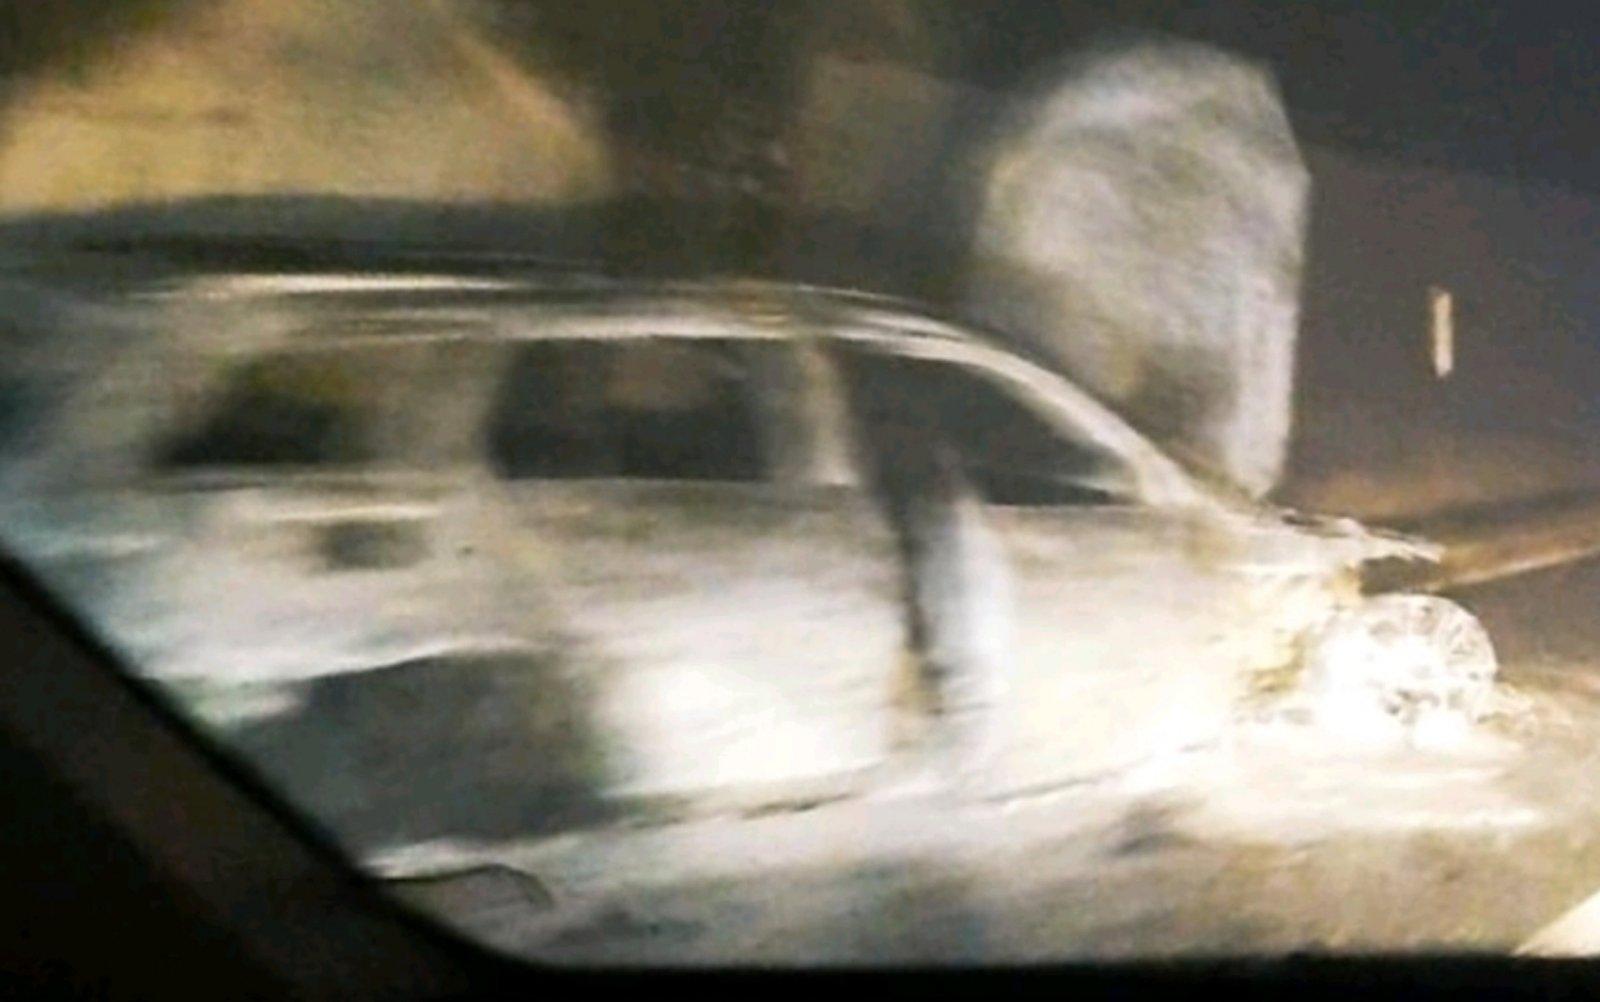 Automobil u potpunosti izgorio - Avaz